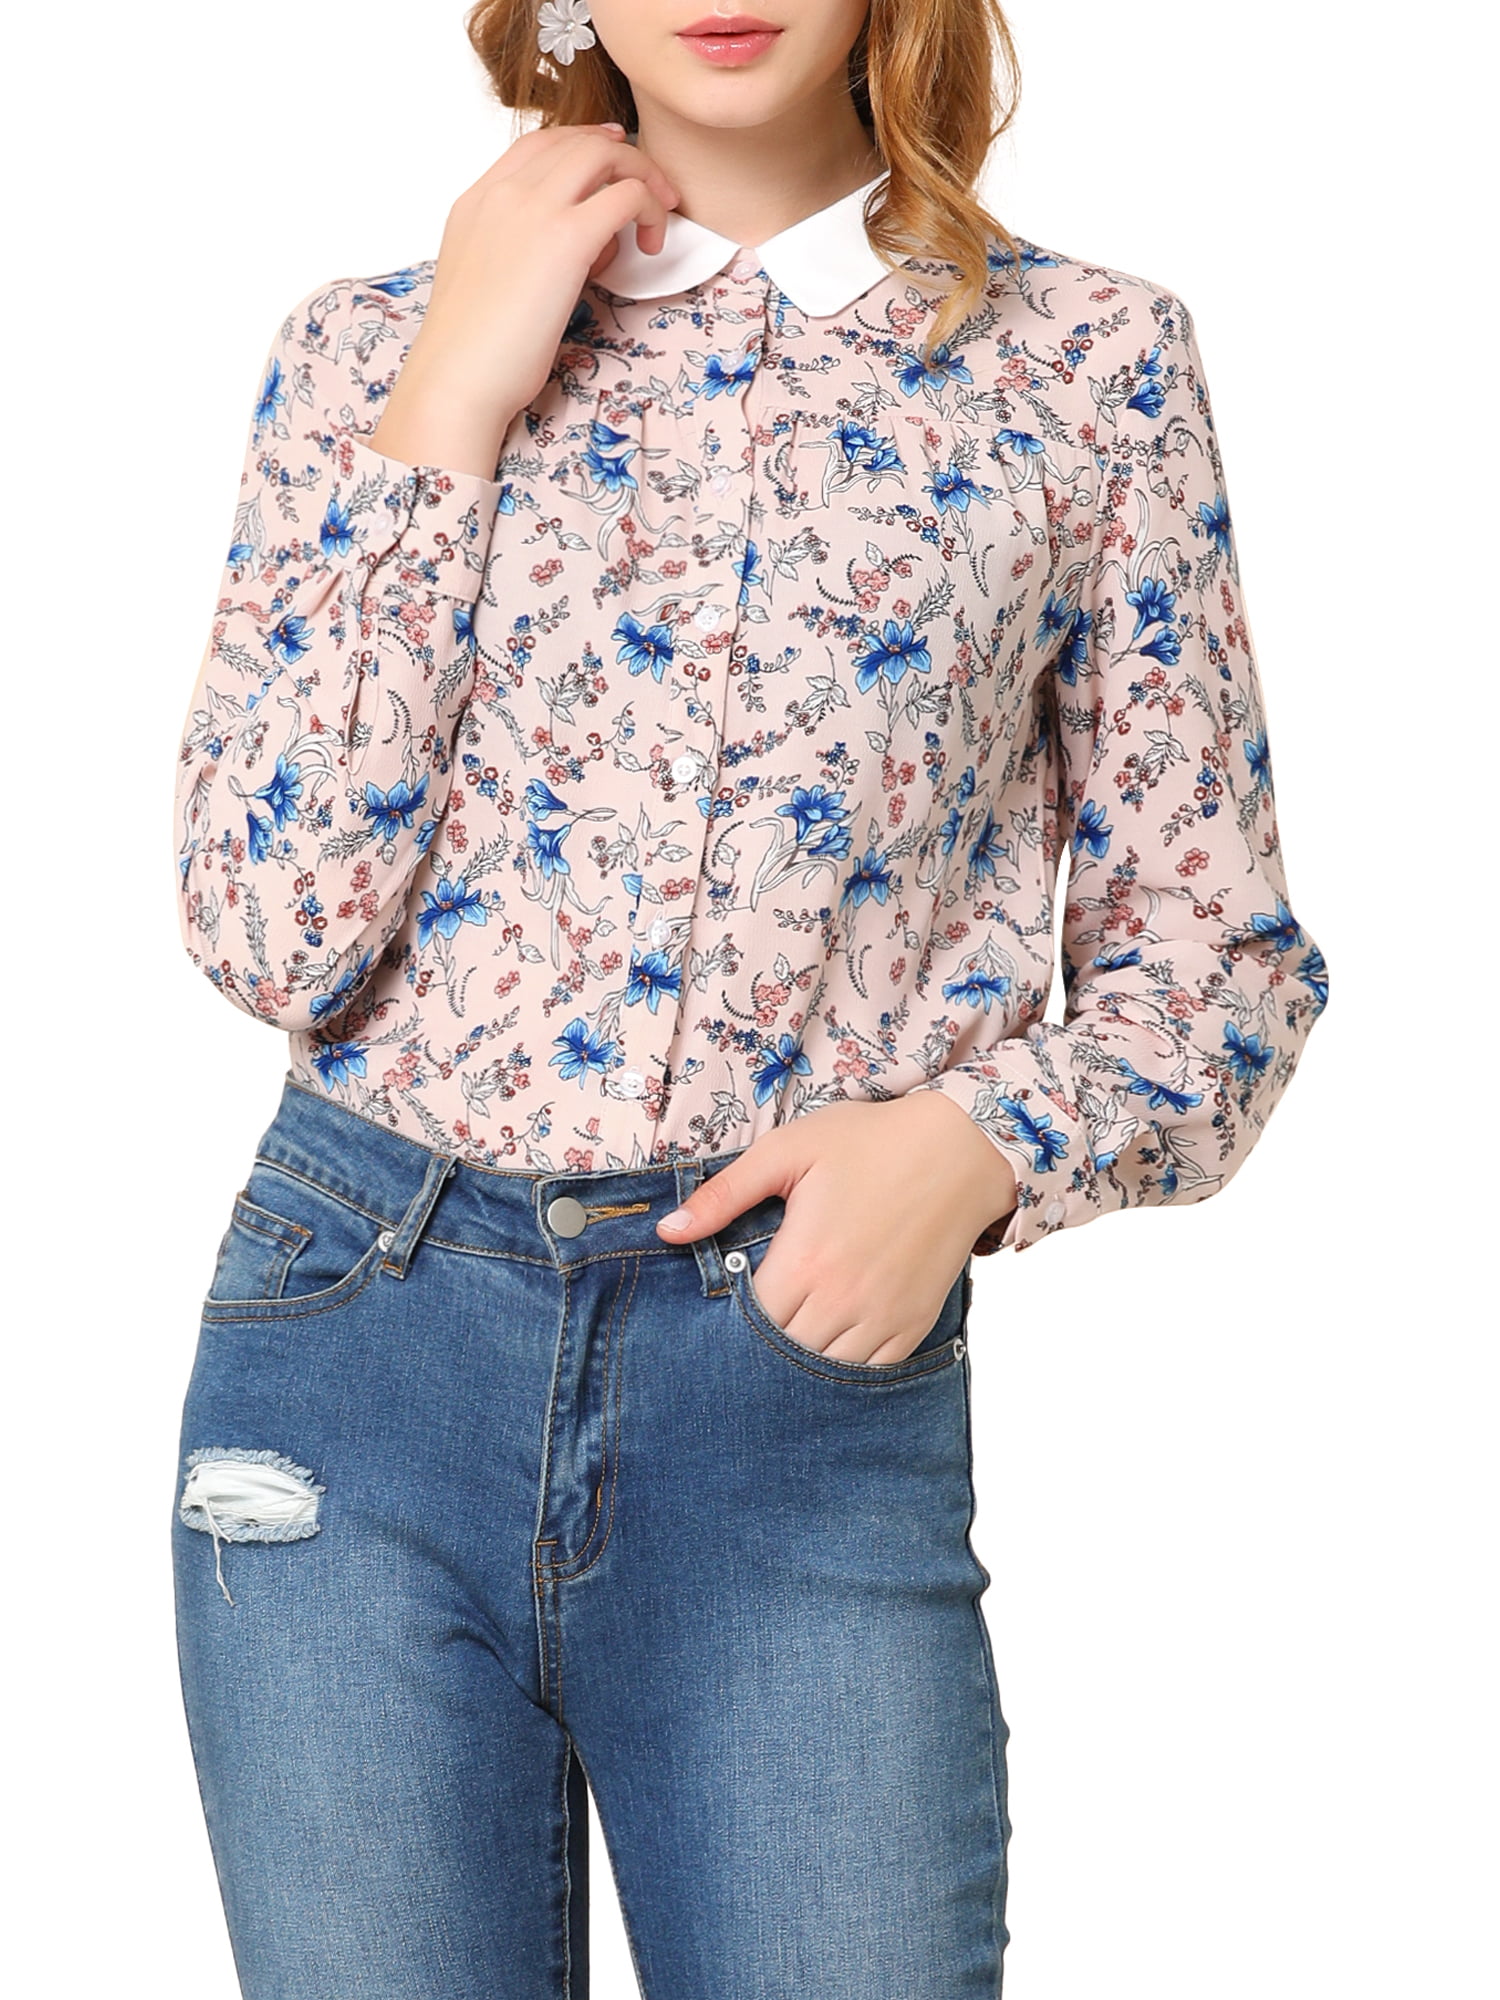 Tops Down Shirt Buttons Women  Blouse Floral Print Long Sleeve 